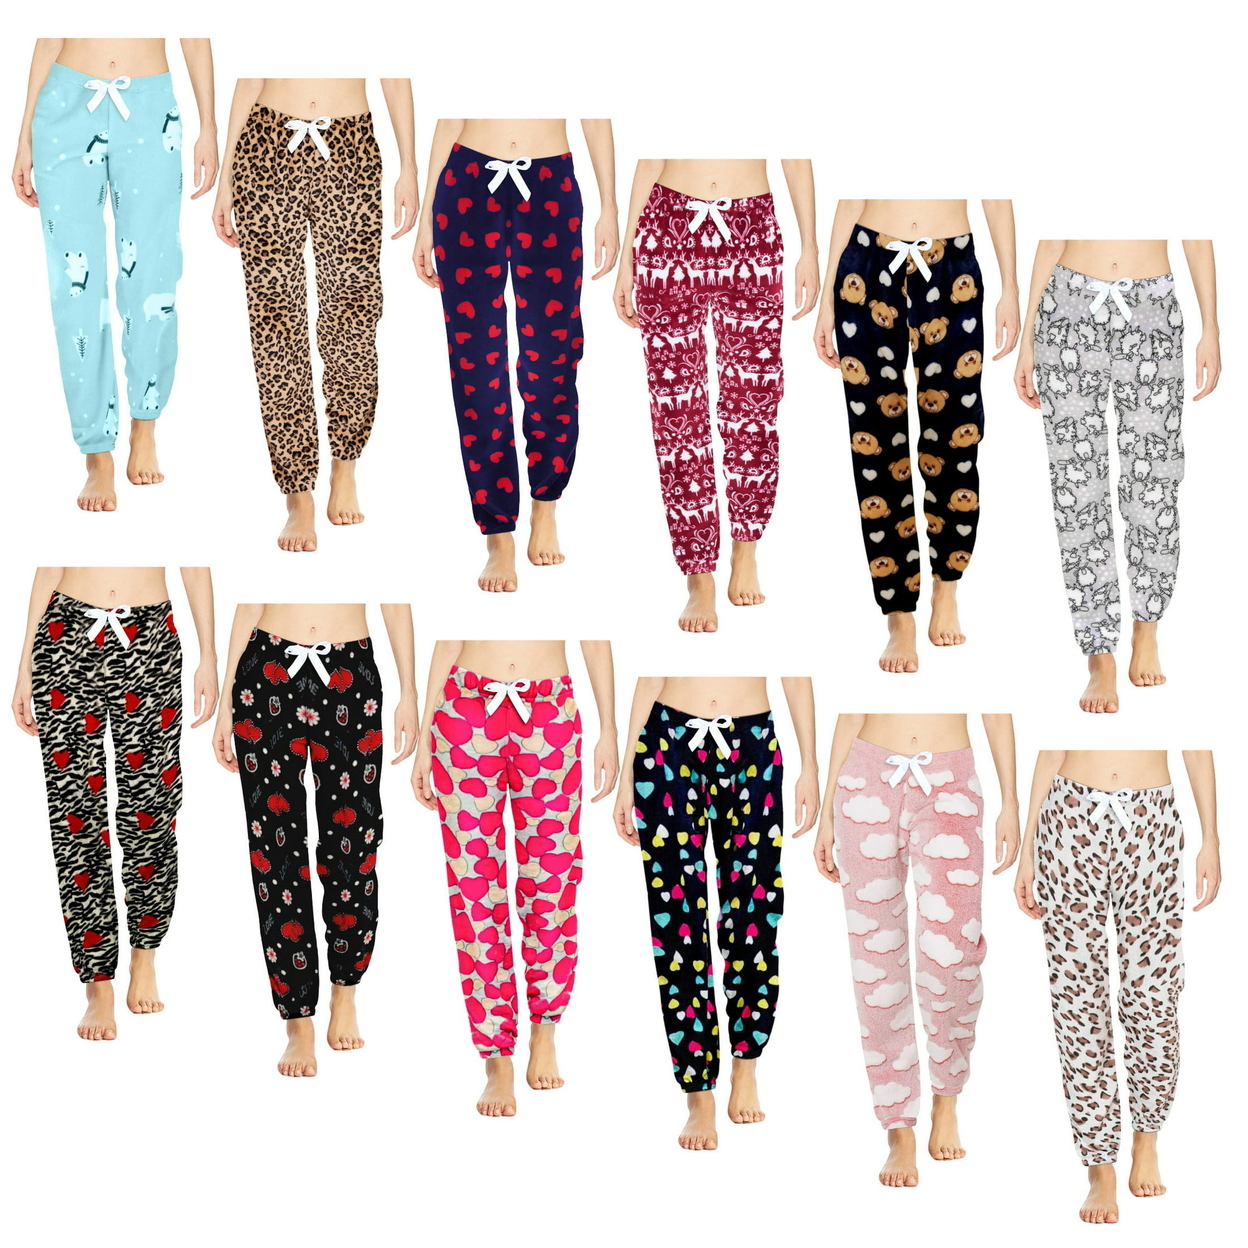 3-Pack: Women's Printed Ultra-Soft Comfy Stretch Micro-Fleece Pajama Lounge Pants - Xx-large, Love